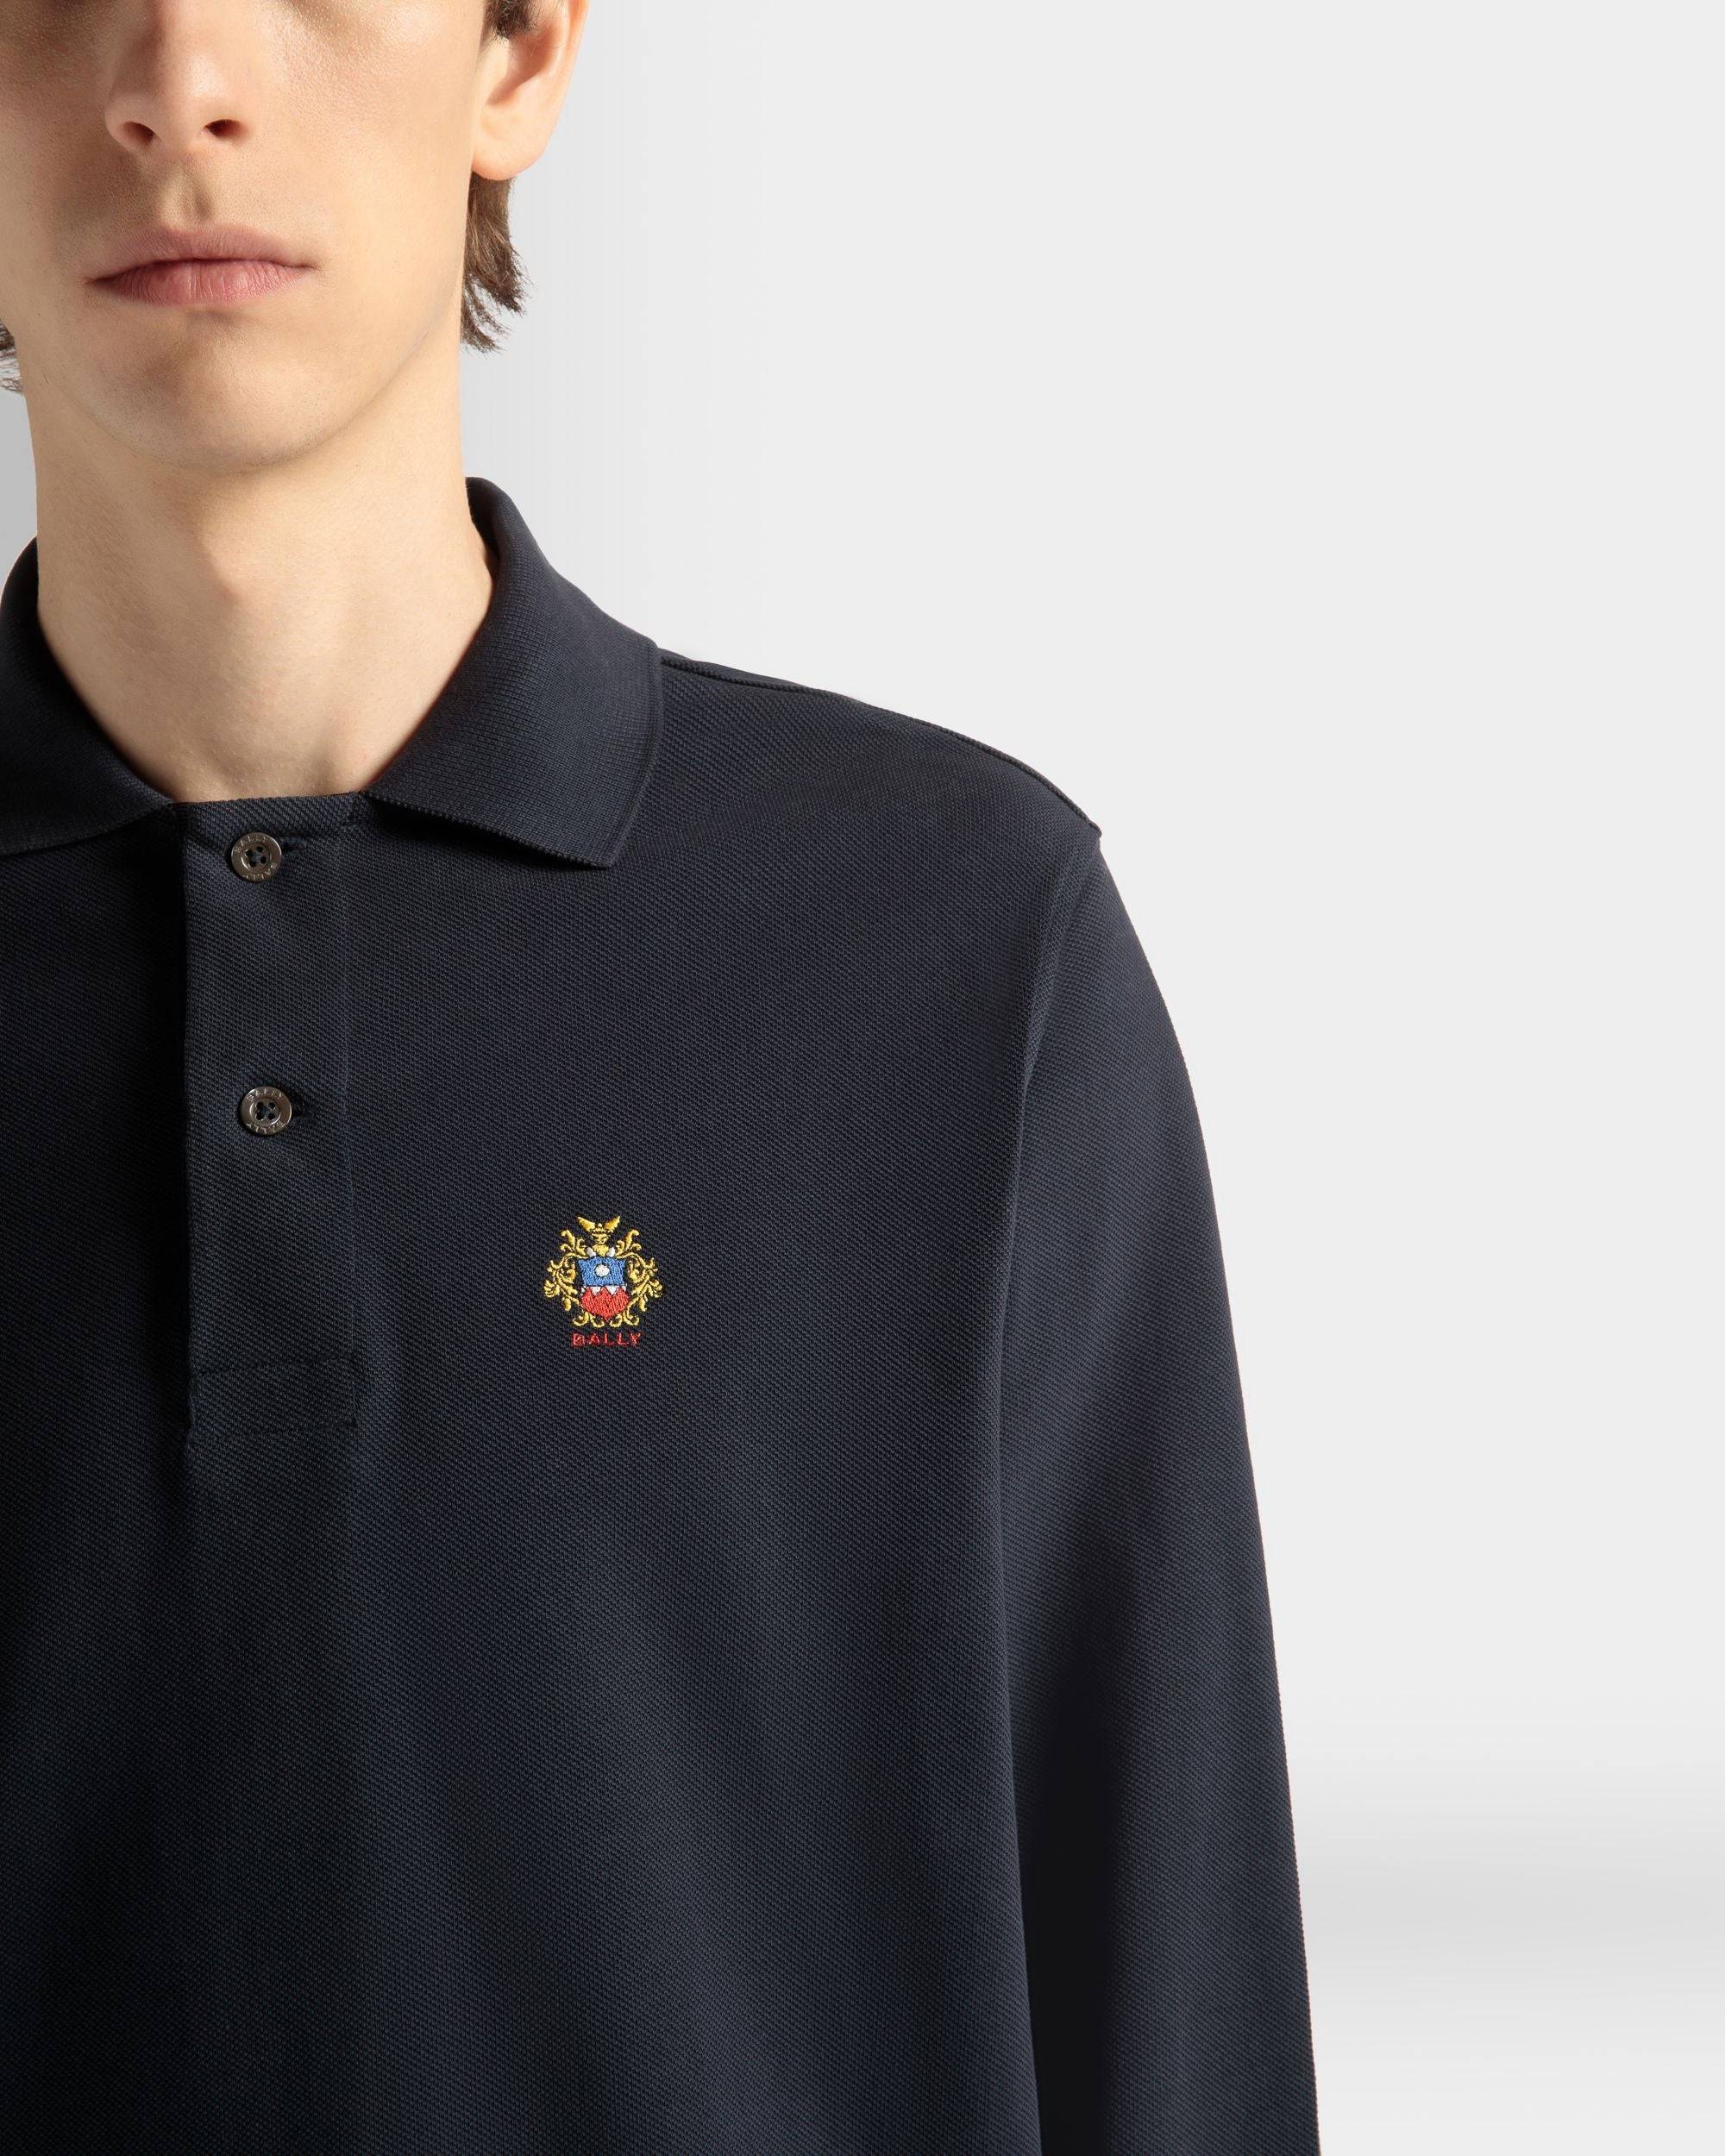 Men's Long Sleeve Polo Shirt in Navy Blue Cotton | Bally | On Model Detail